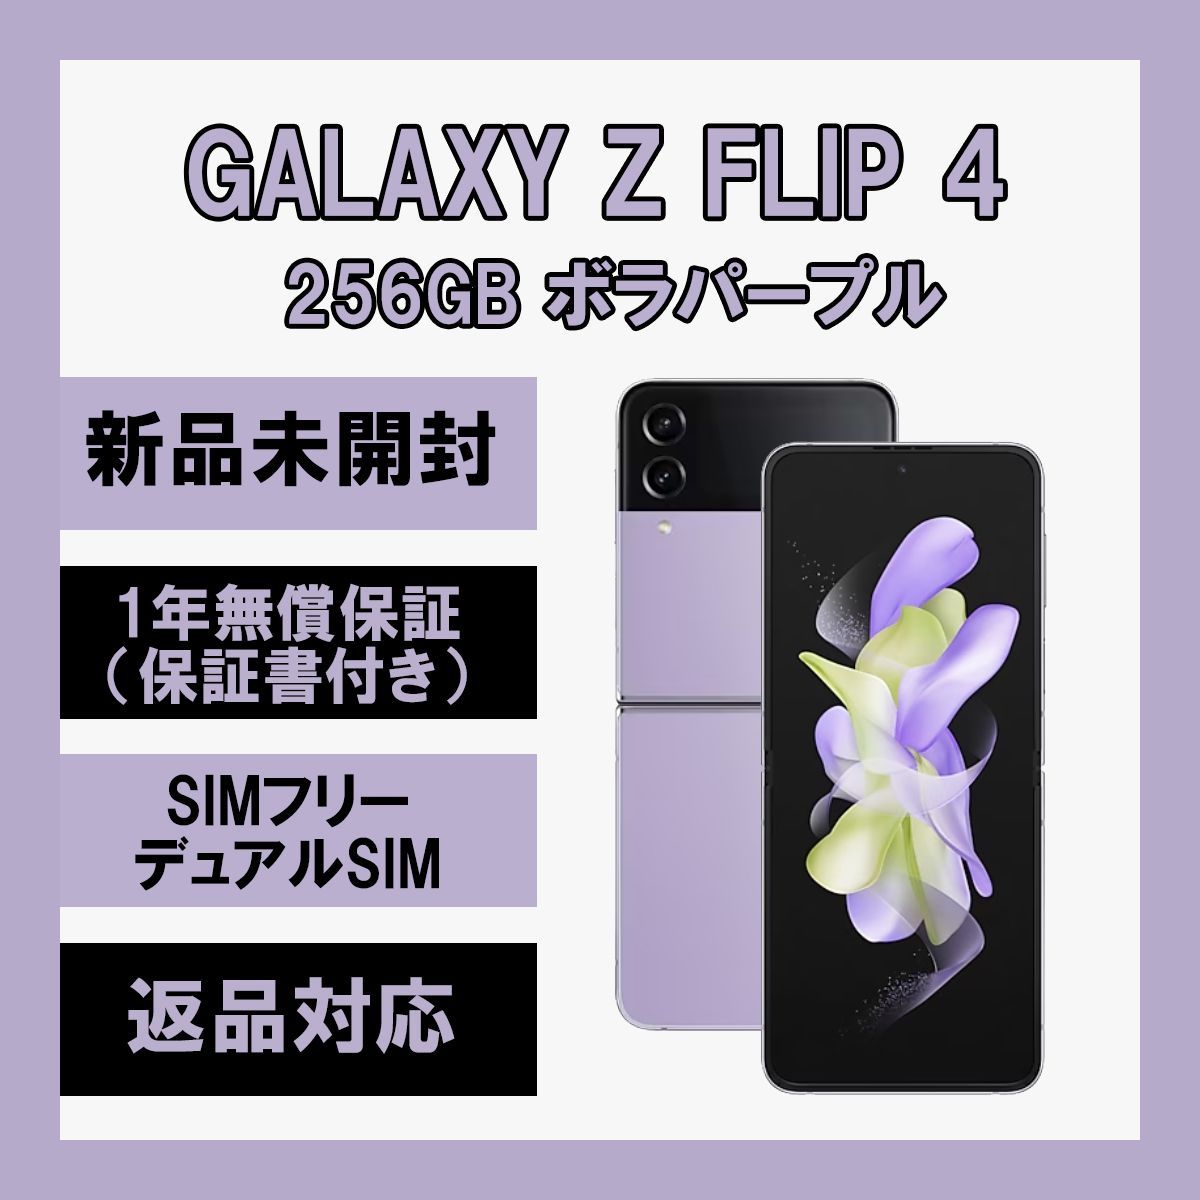 Galaxy Z Flip4 ボラパープル 256GB SIMフリー おまけ付き